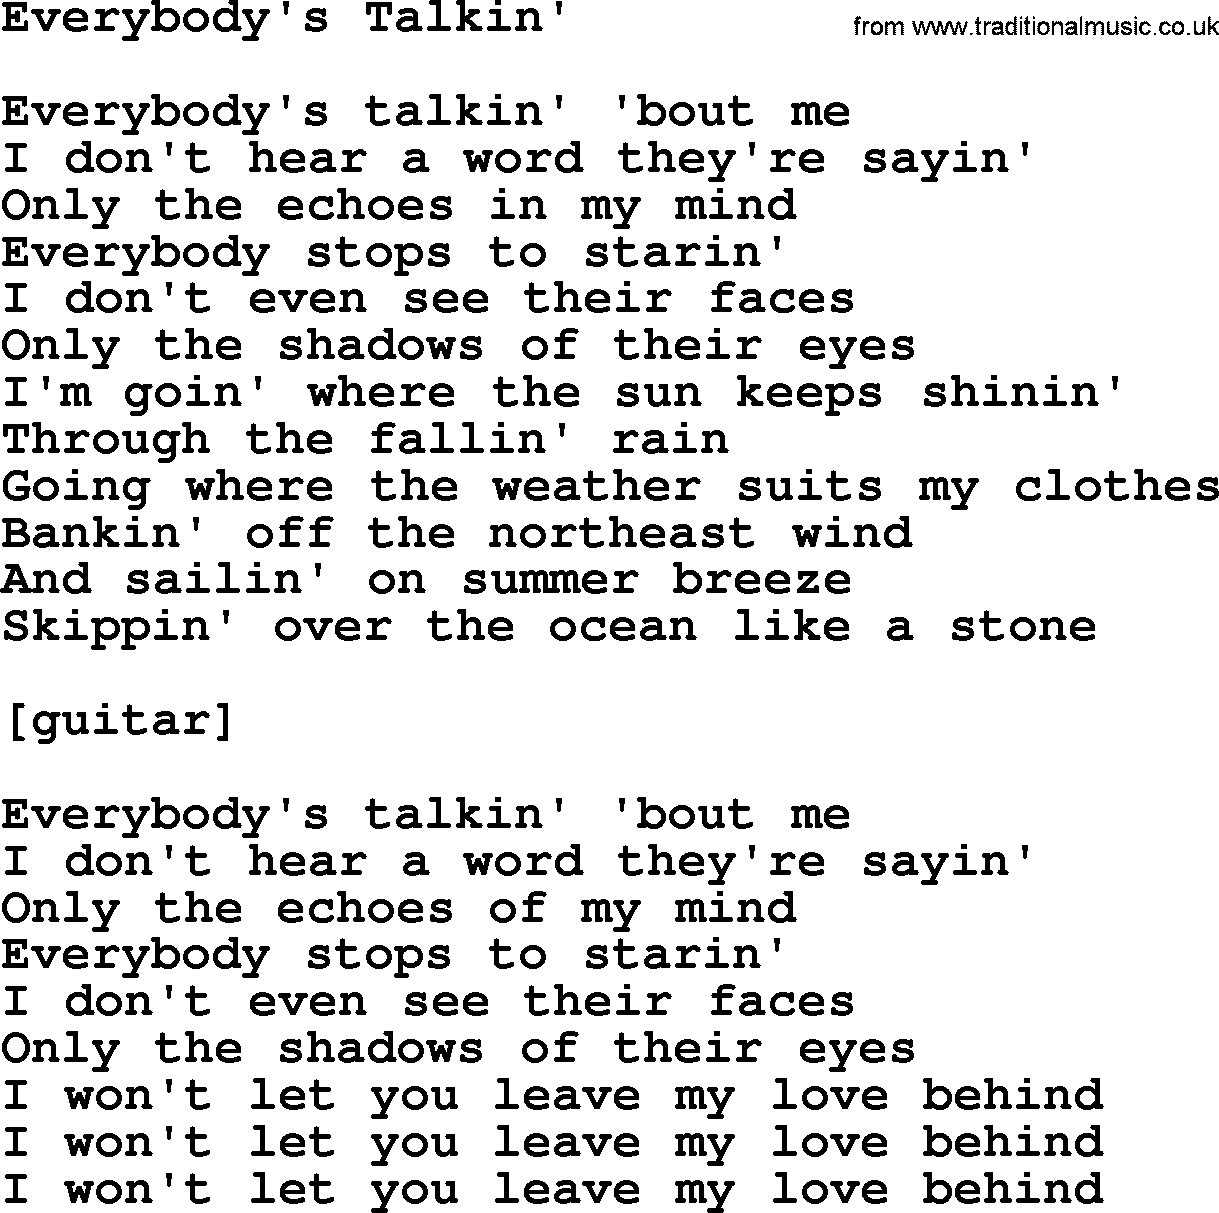 Willie Nelson song: Everybody's Talkin' lyrics